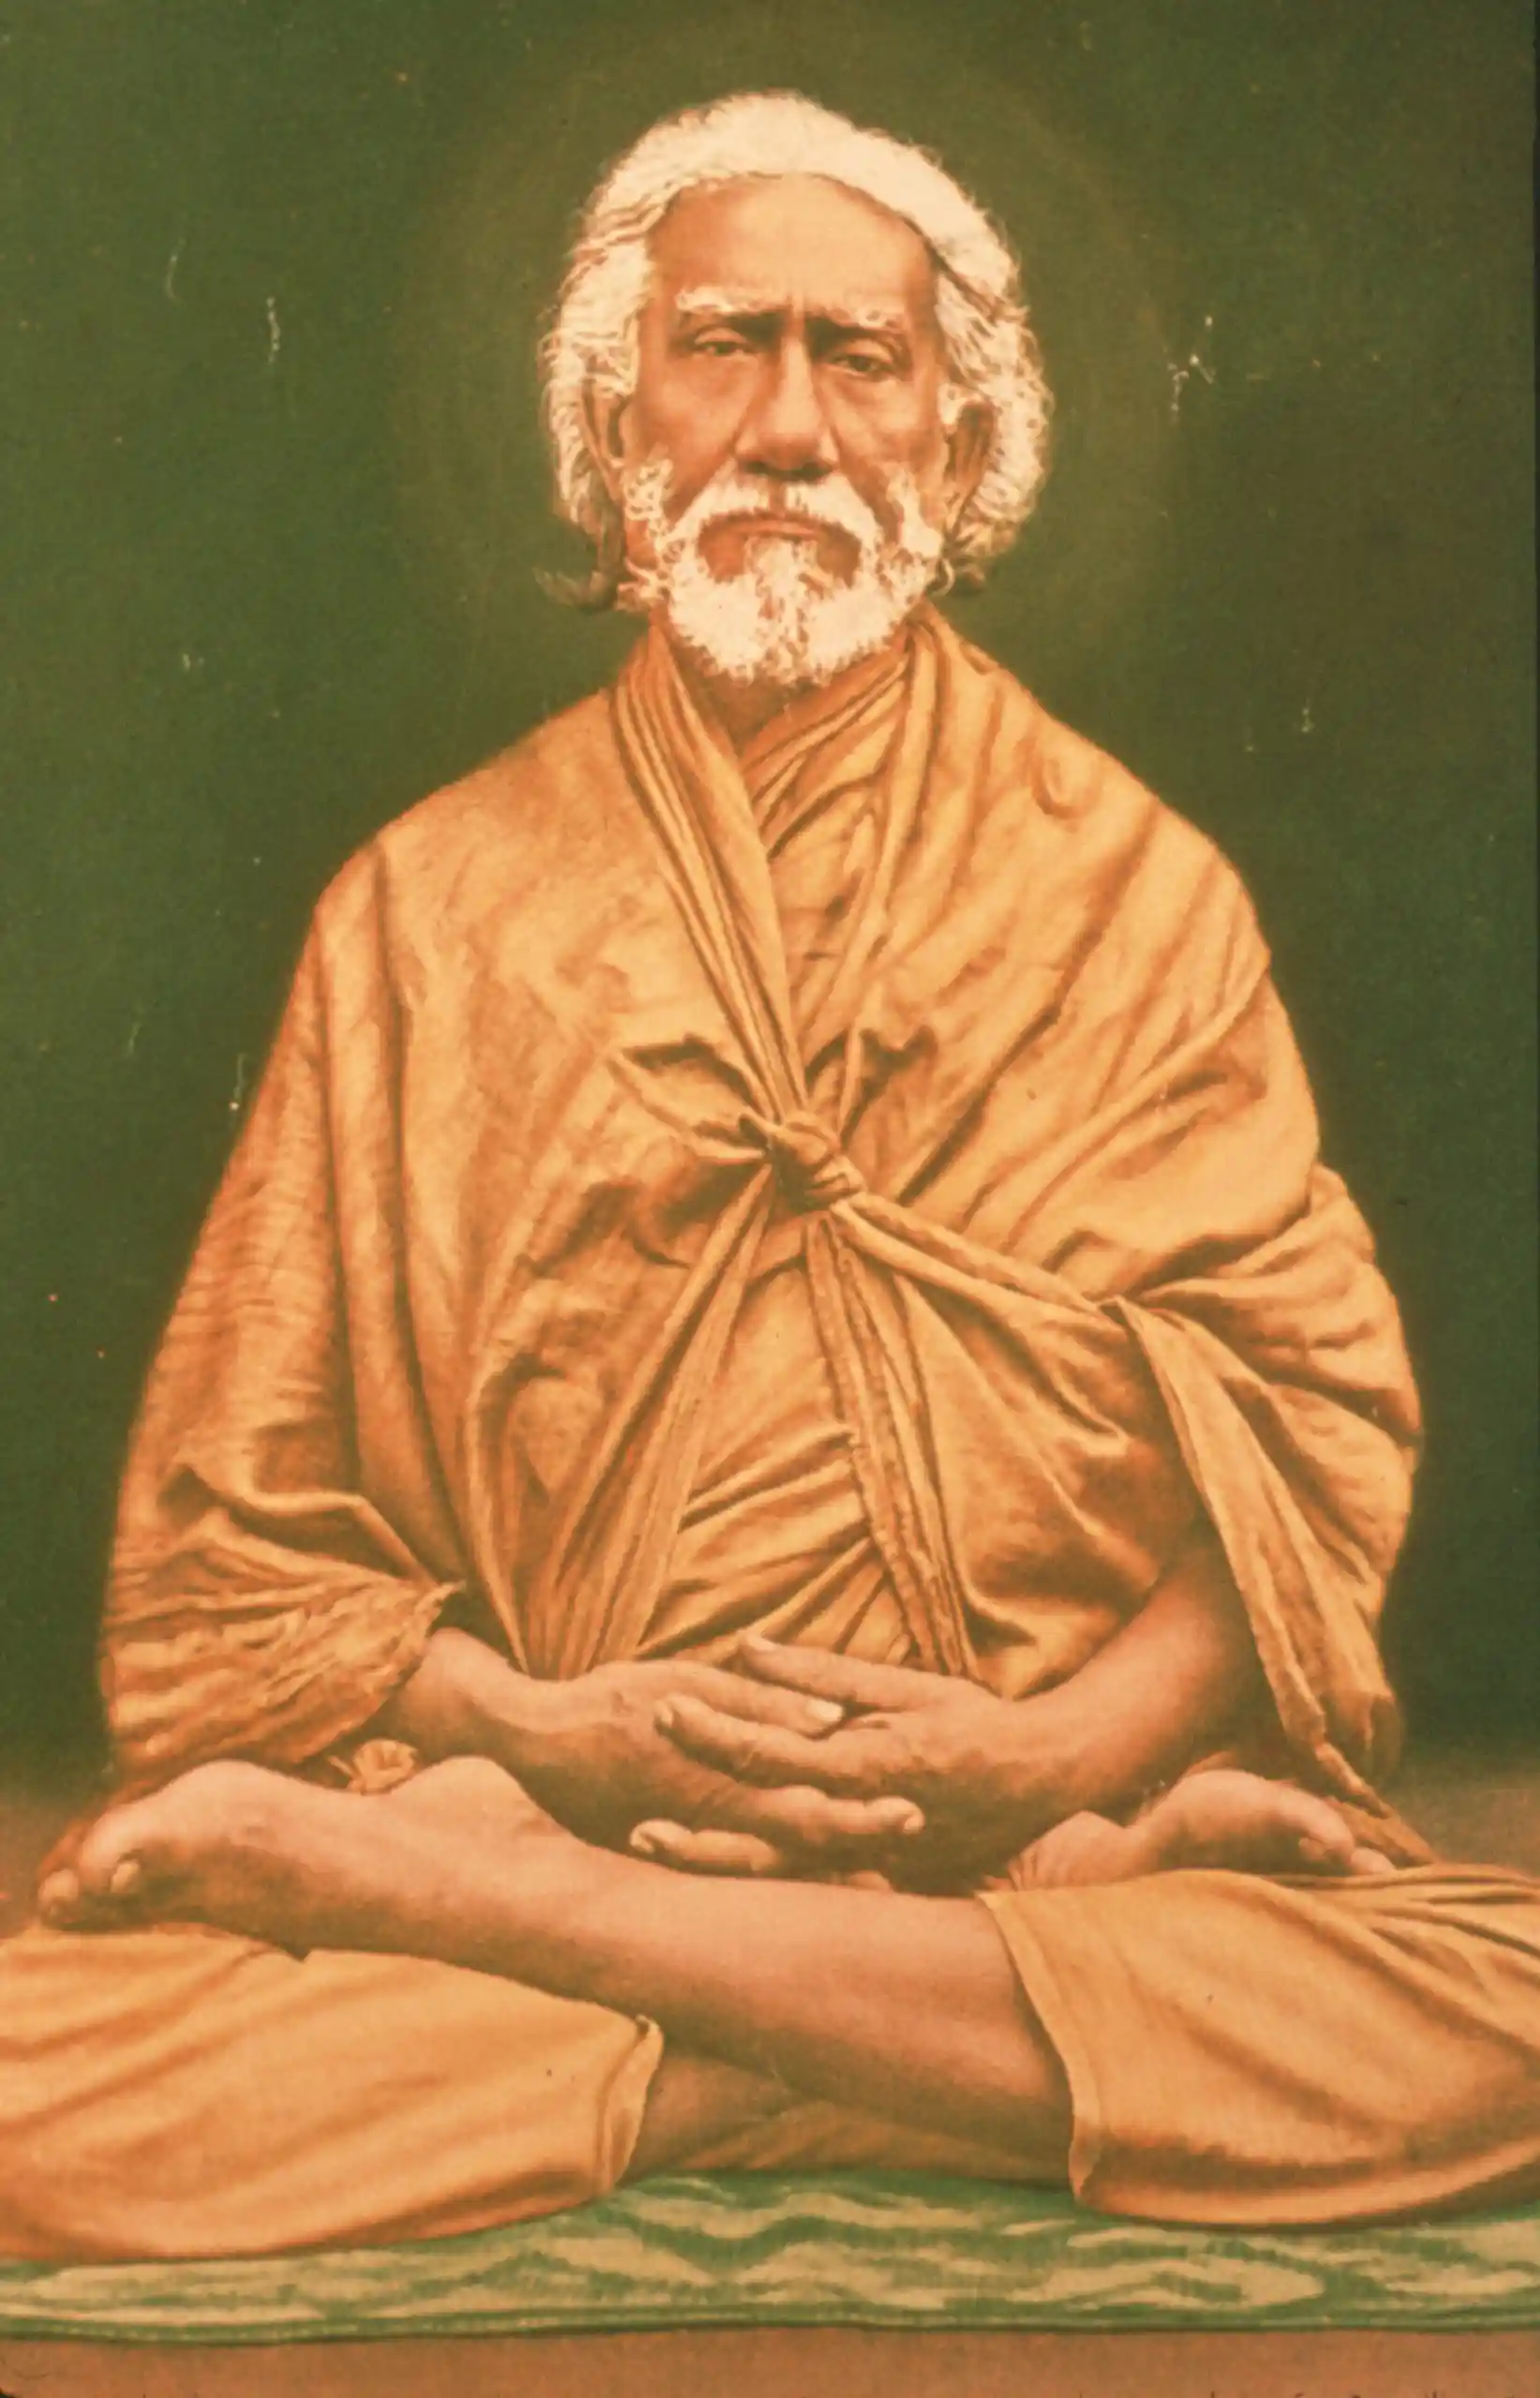 Guru Sri Yikteswar Giri